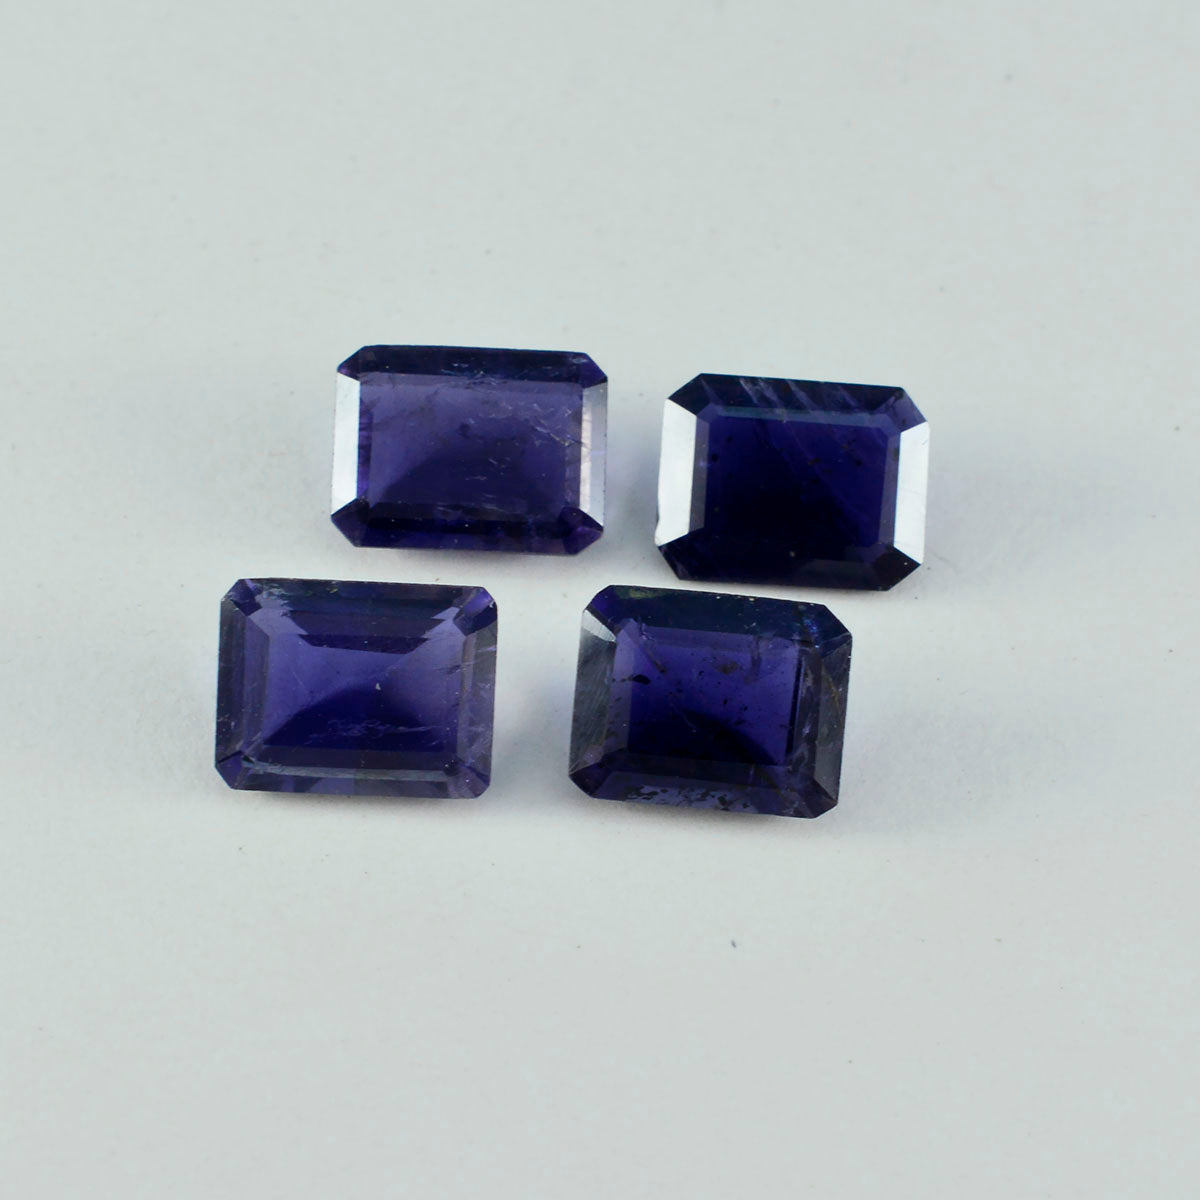 riyogems 1pc iolite blu sfaccettata 10x12 mm forma ottagonale gemma di qualità aaa